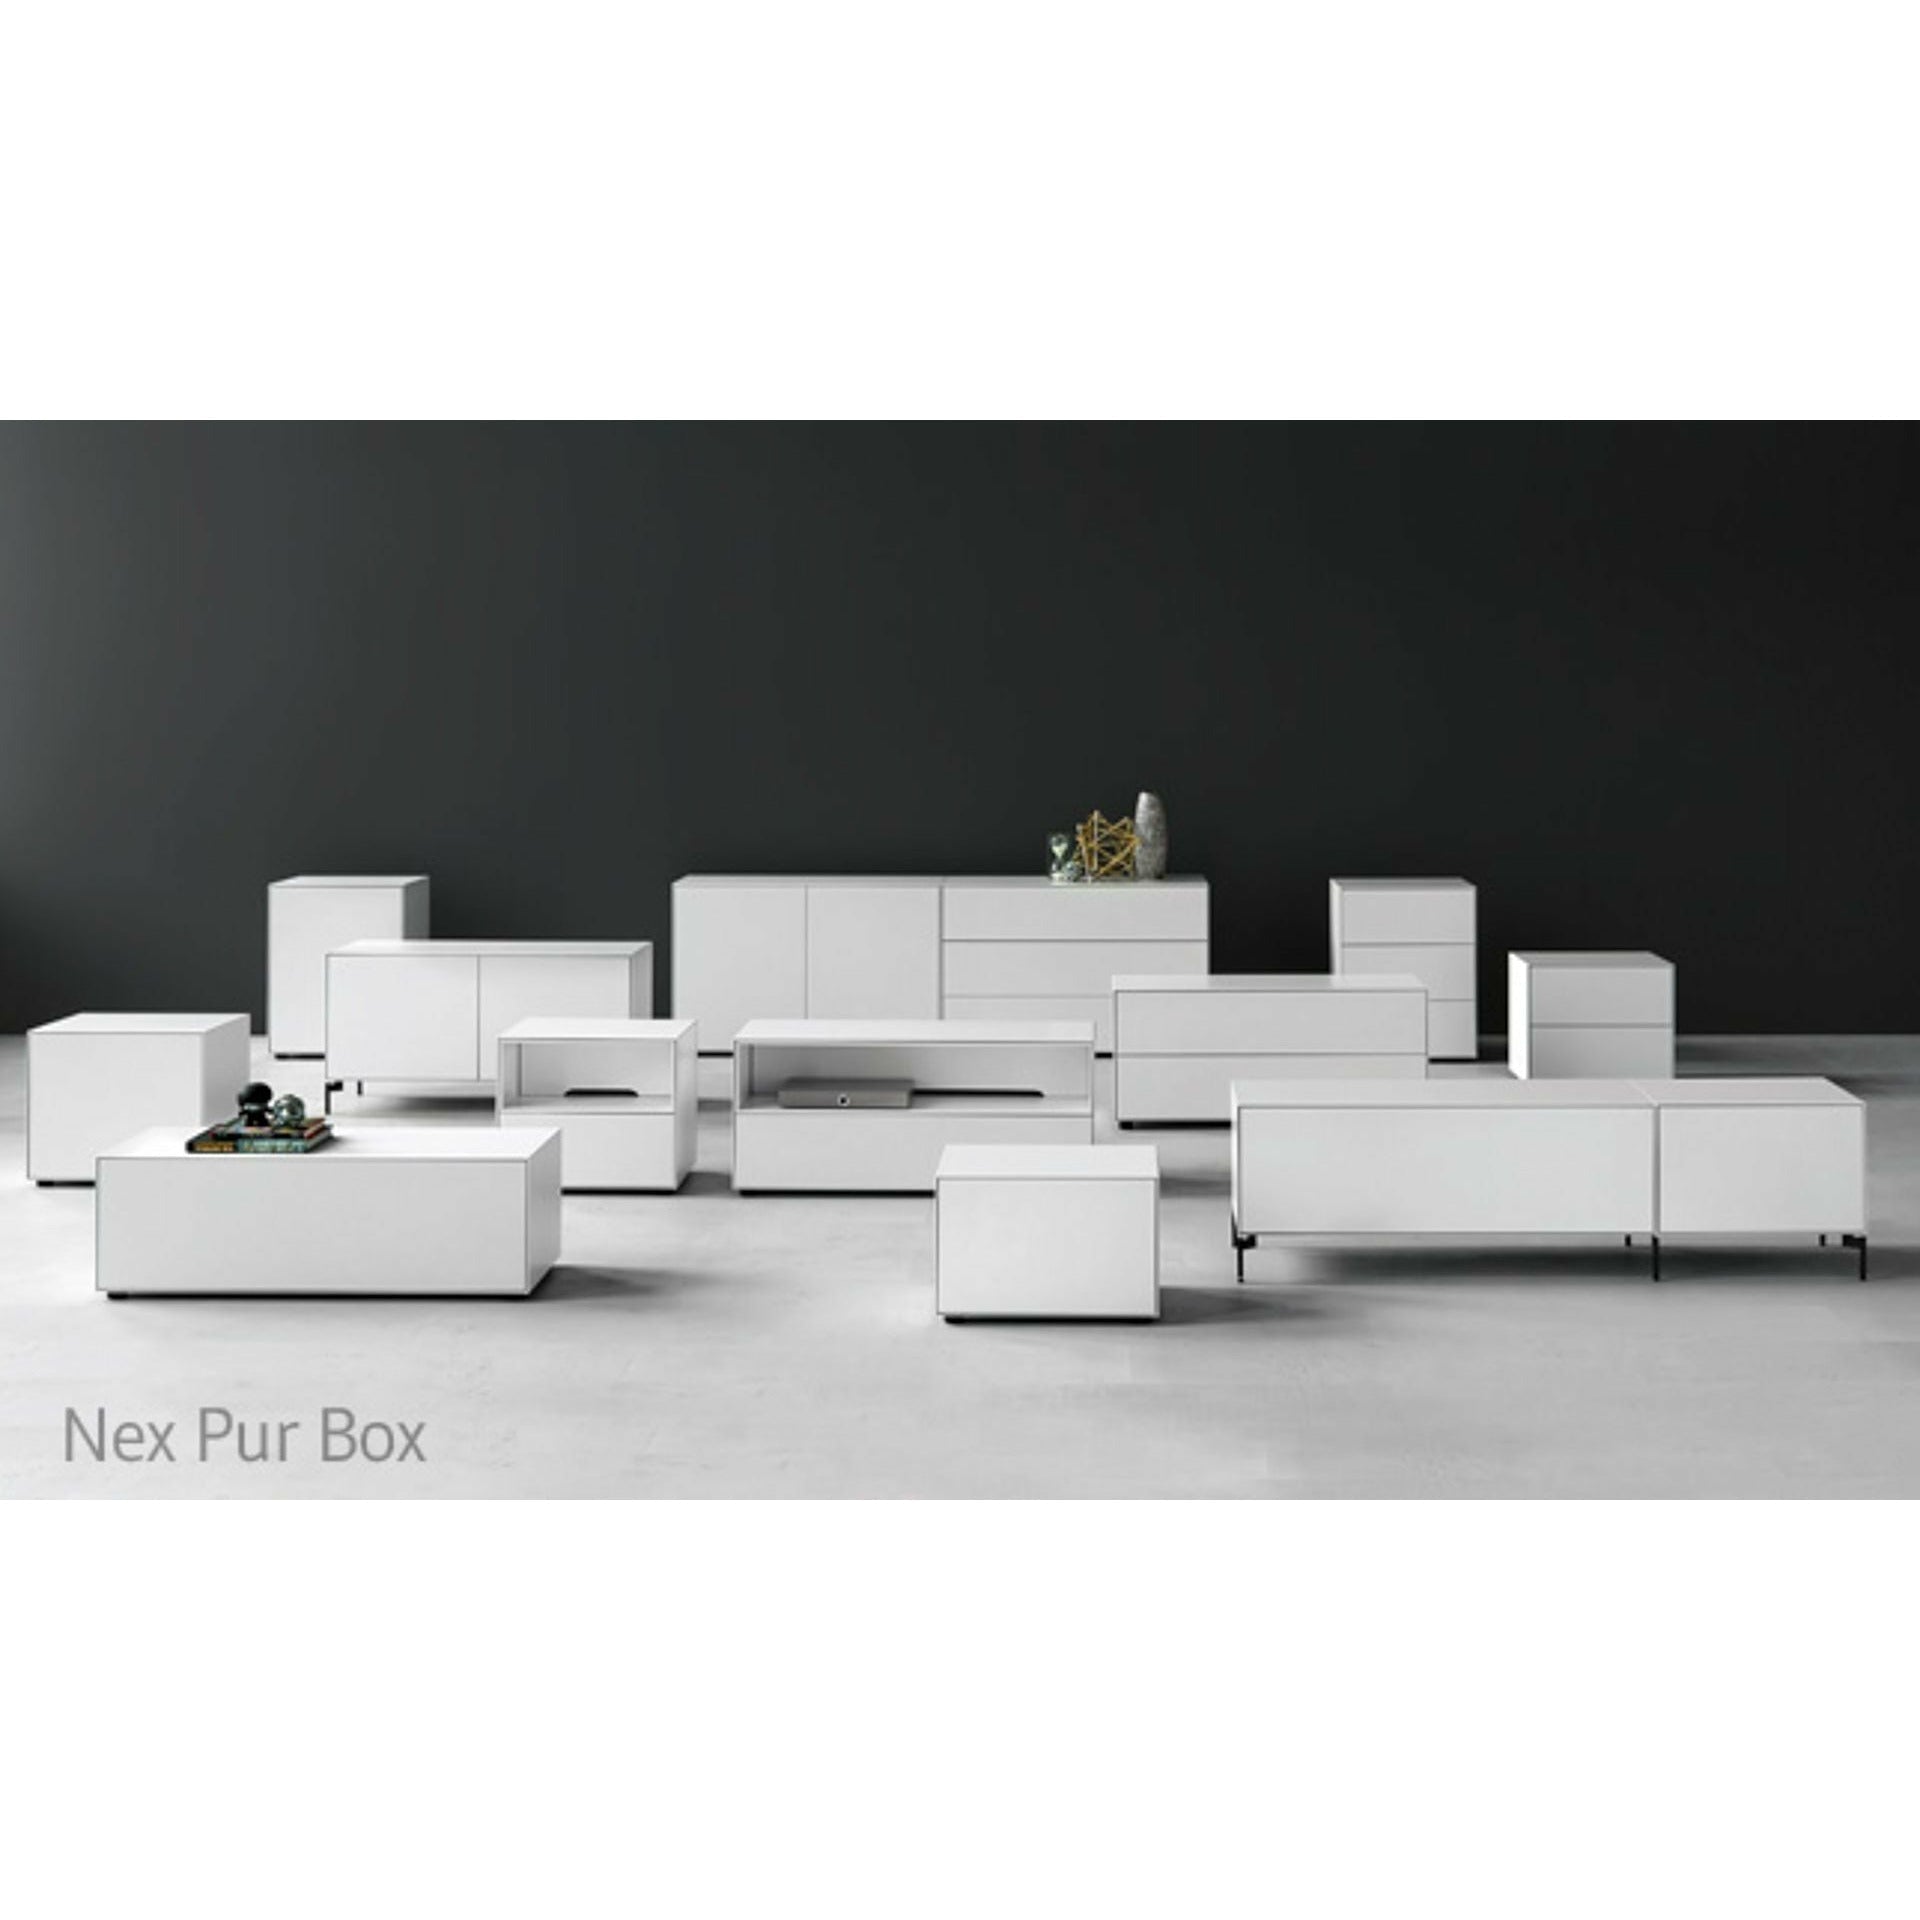 Piure Nex Pur Box Tür Hx B 75x120 Cm, 1 Fachboden, Weiß